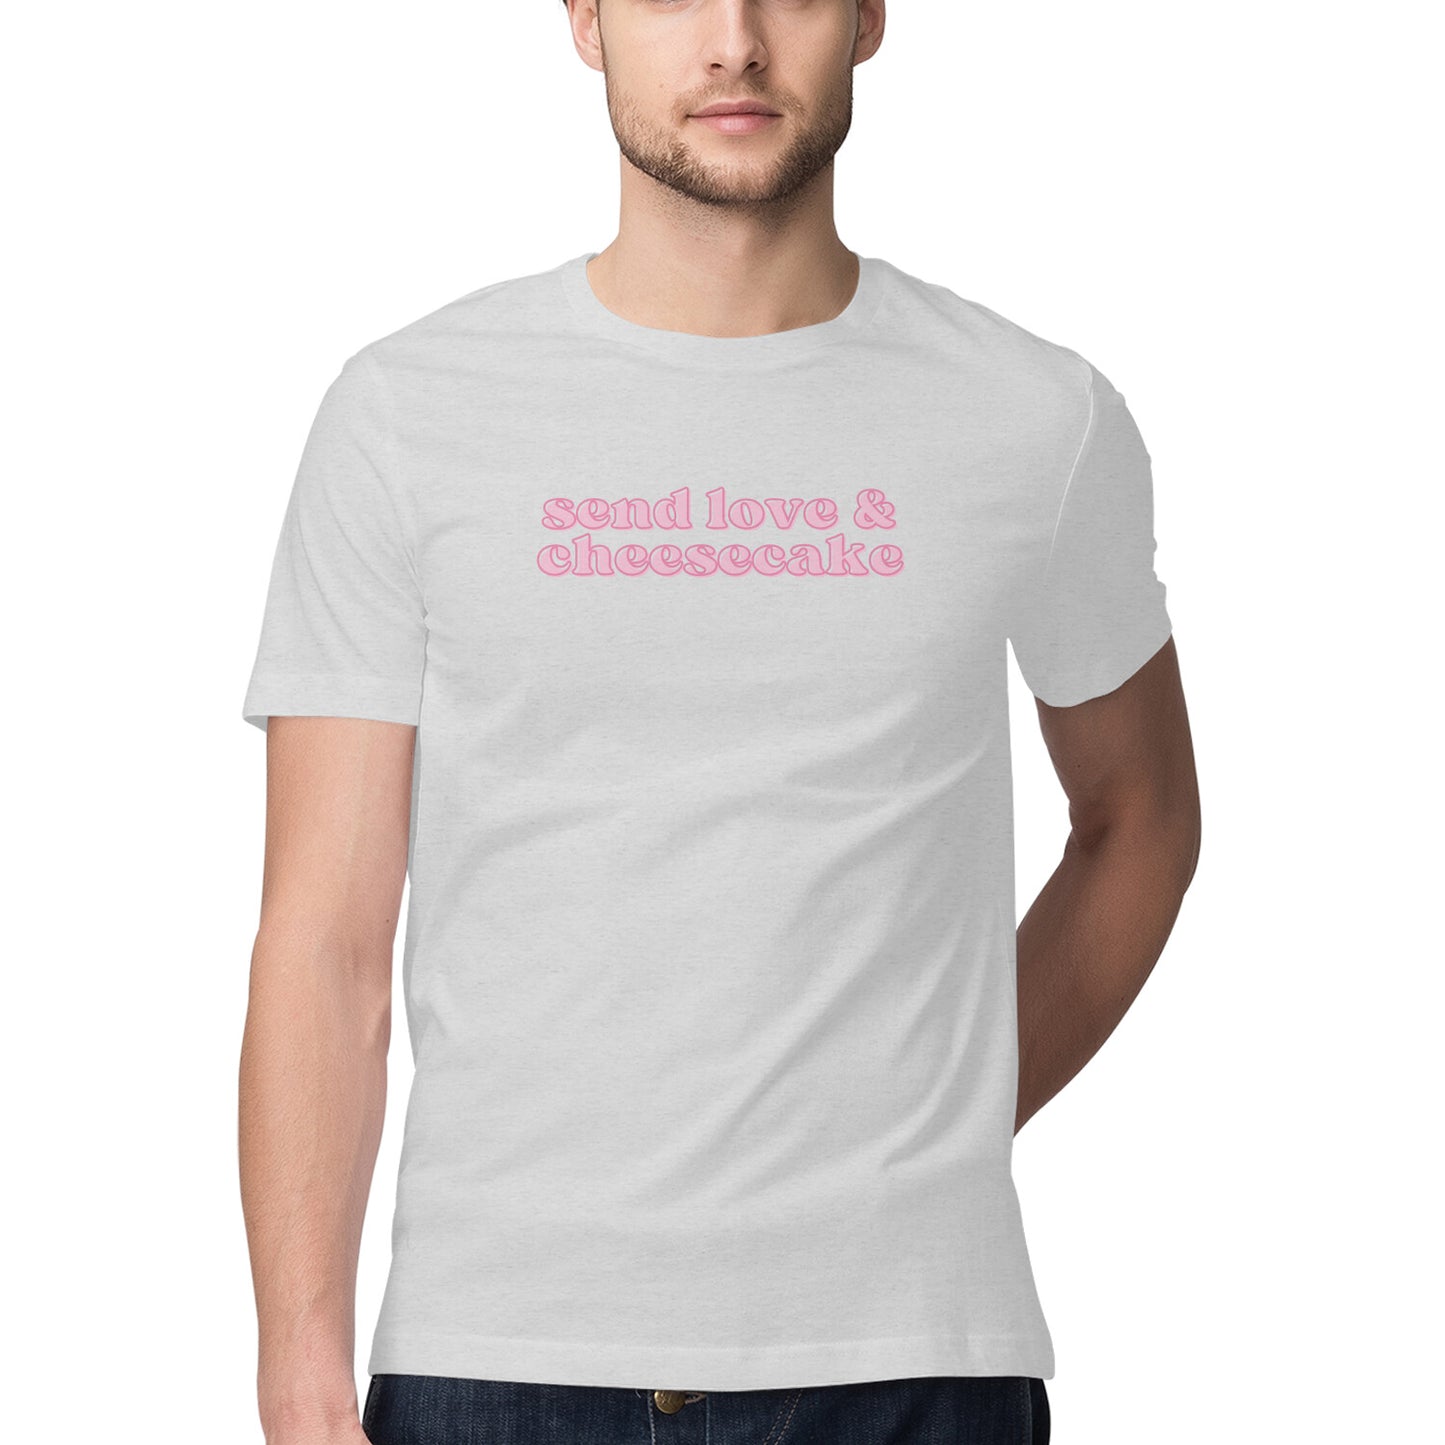 Send Love & Cheesecake Unisex Tshirt